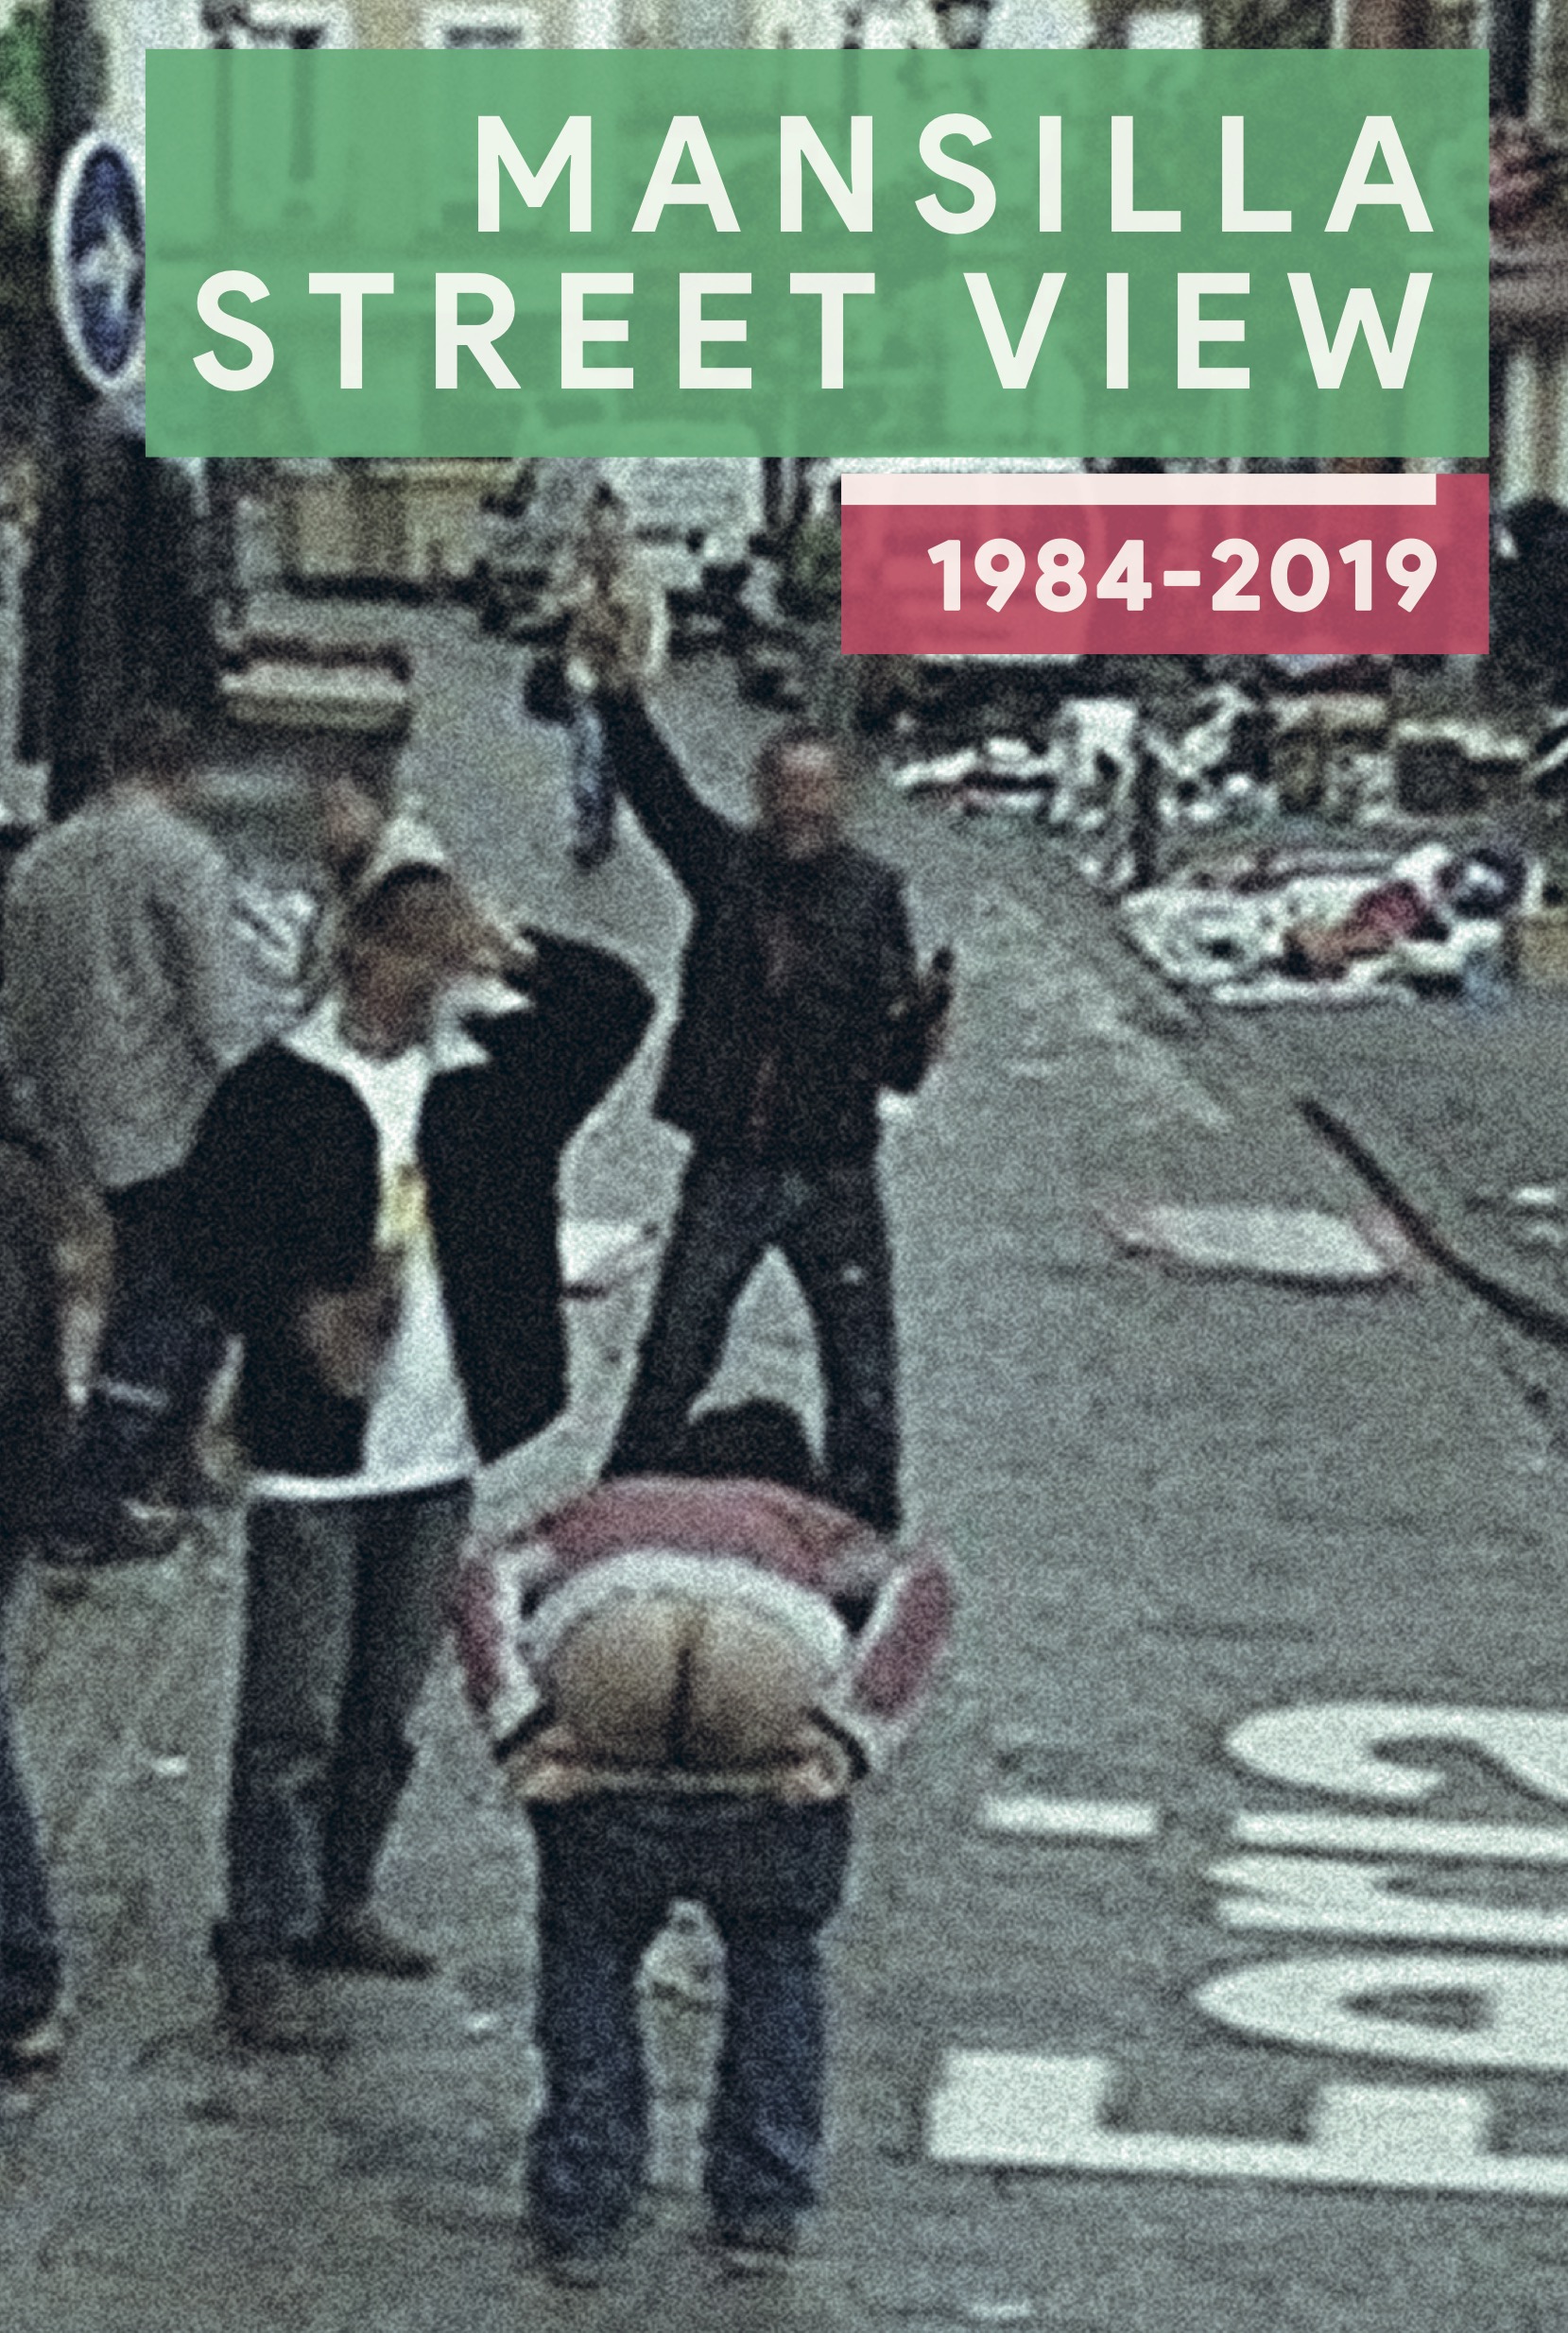 Cubierta del libro: Mansilla Street View 1984-2019